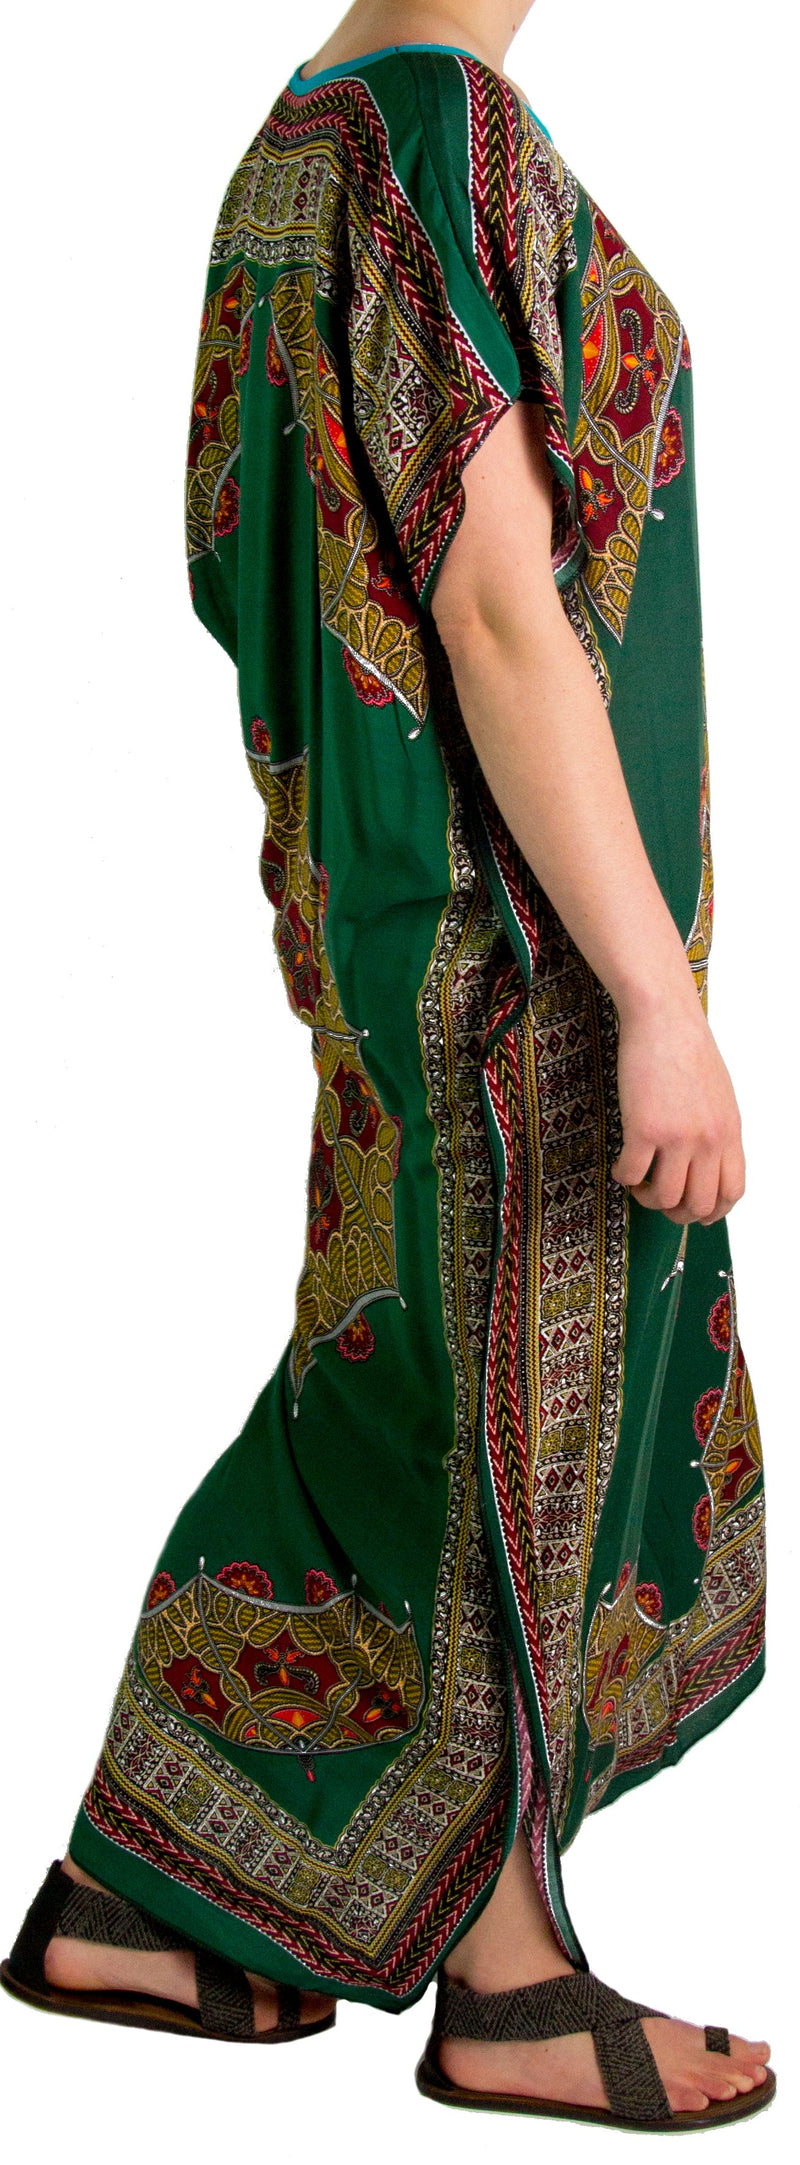 Sakkas Aggy Womens Dashiki African Print Caftan Dress Maxi Boho Hippie Colorful